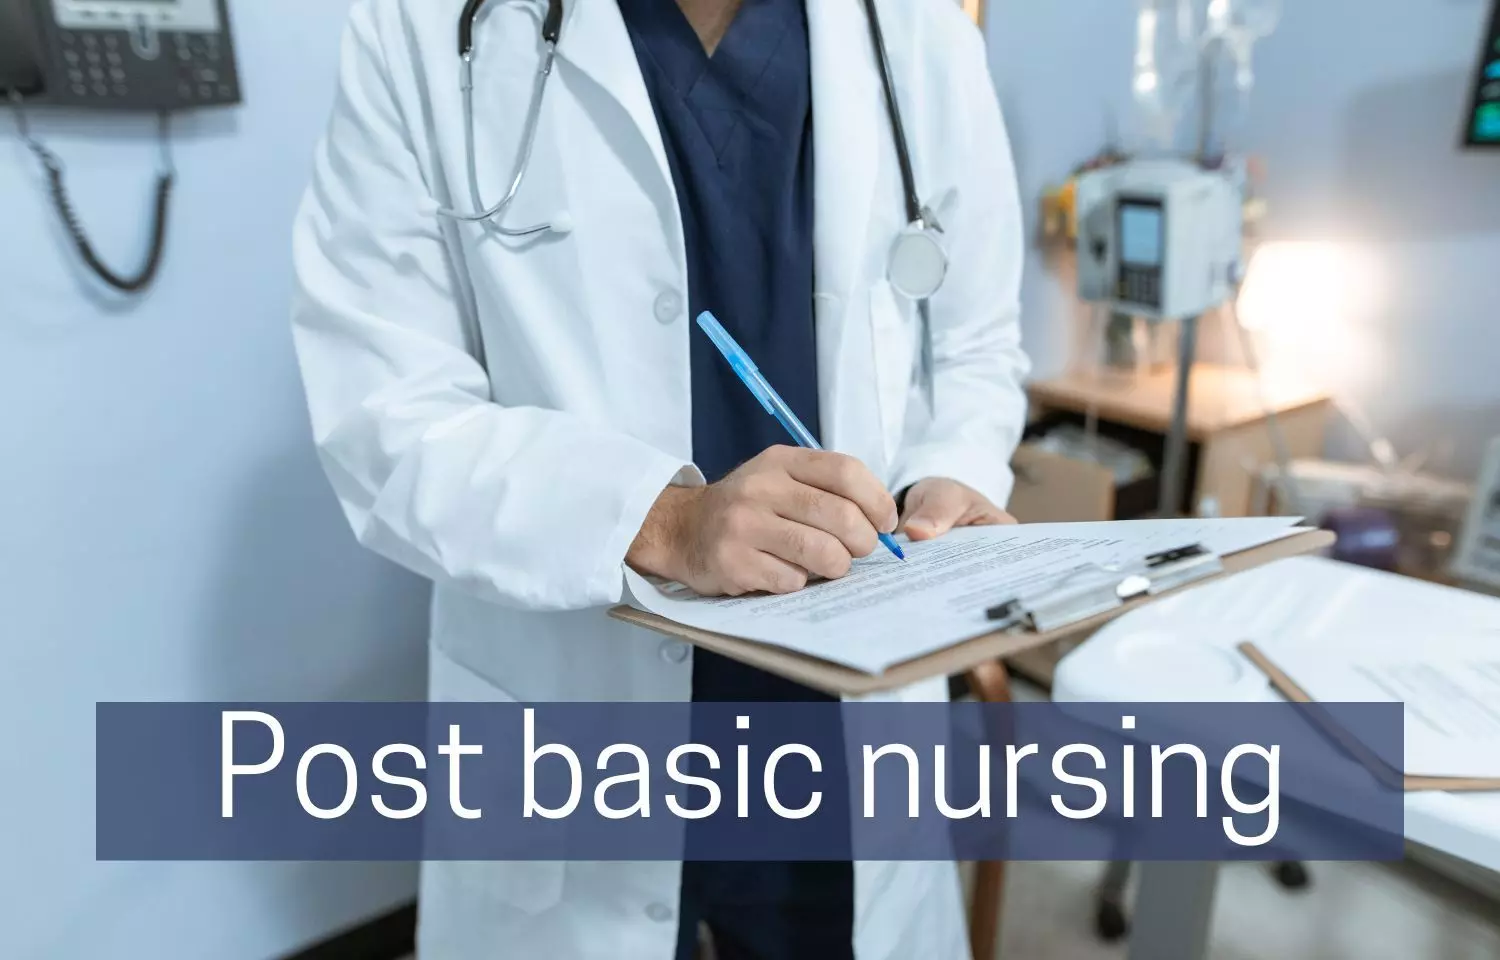 BFUHS Invites Online Application For Post Basic BSc Nursing Course, Apply till 31 August 2022